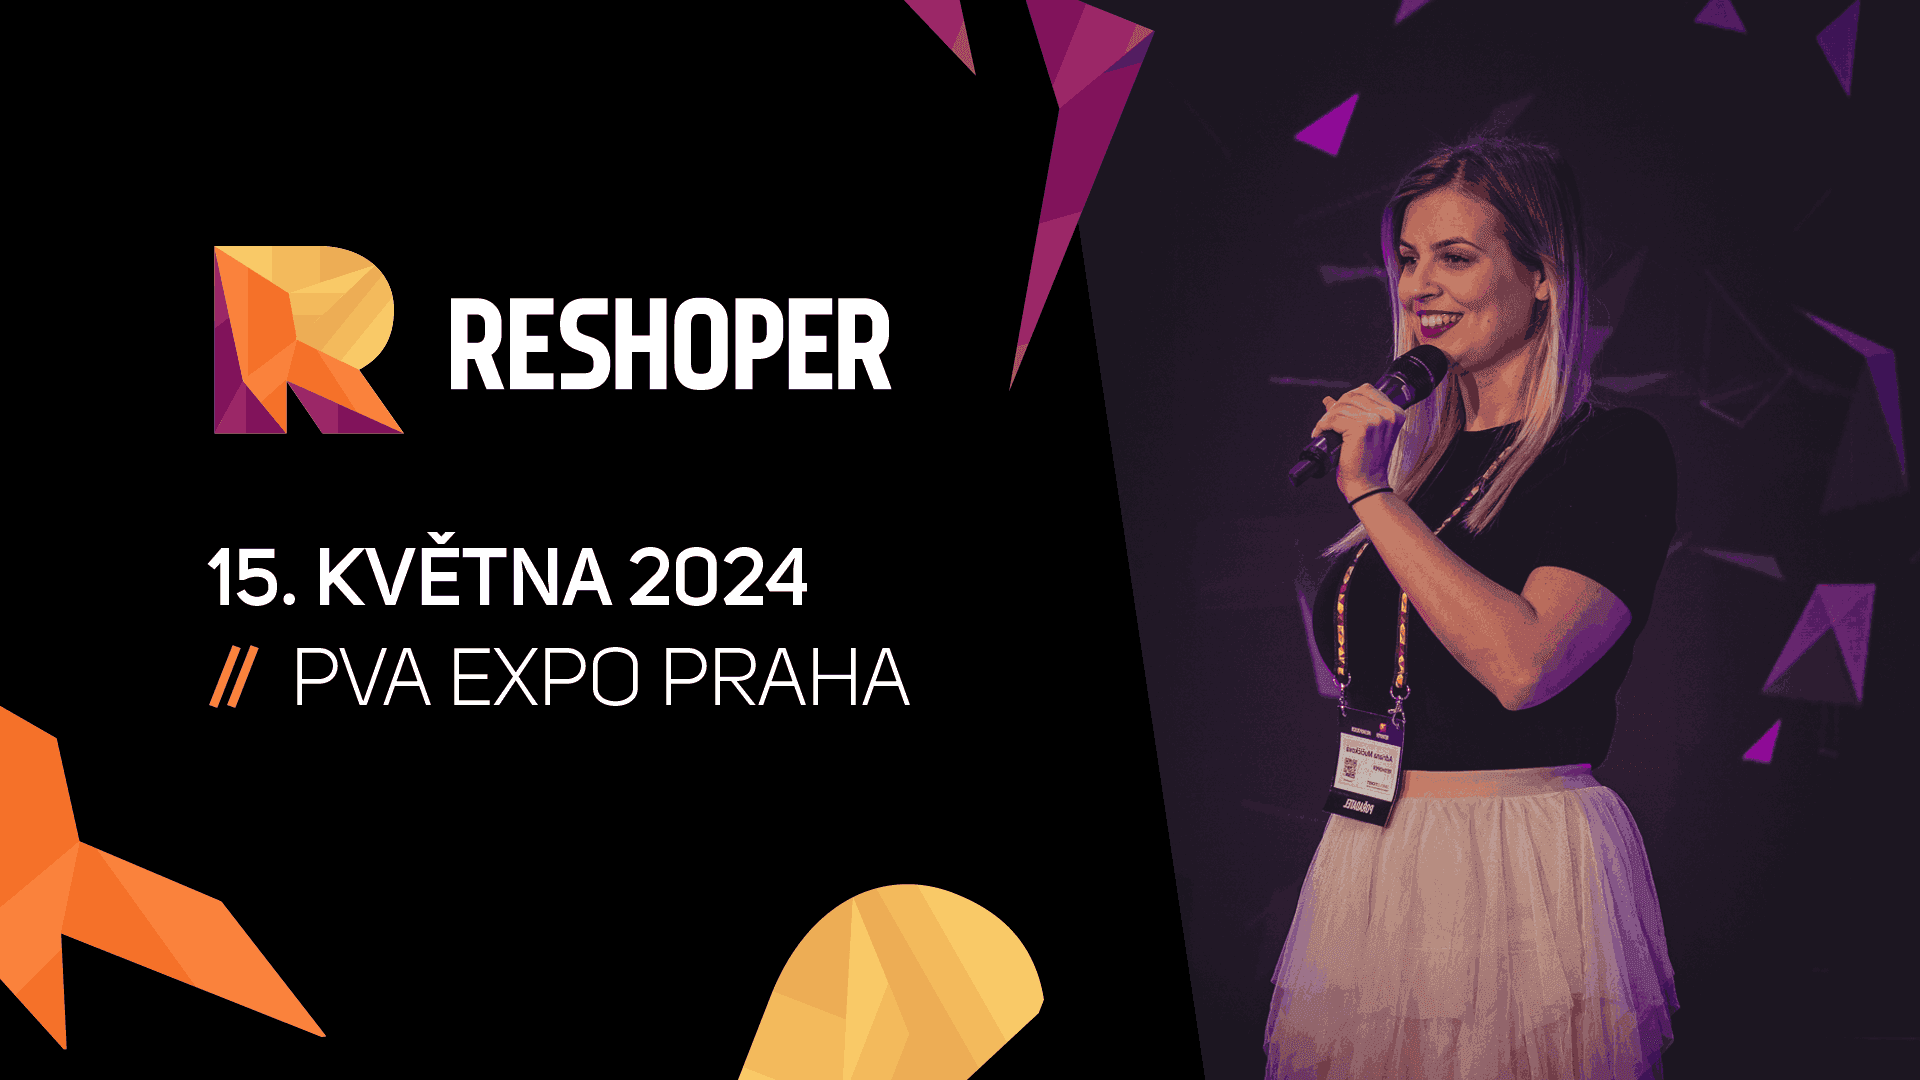 Přijďte za námi na veletrh Reshoper 2024 v PVA EXPO